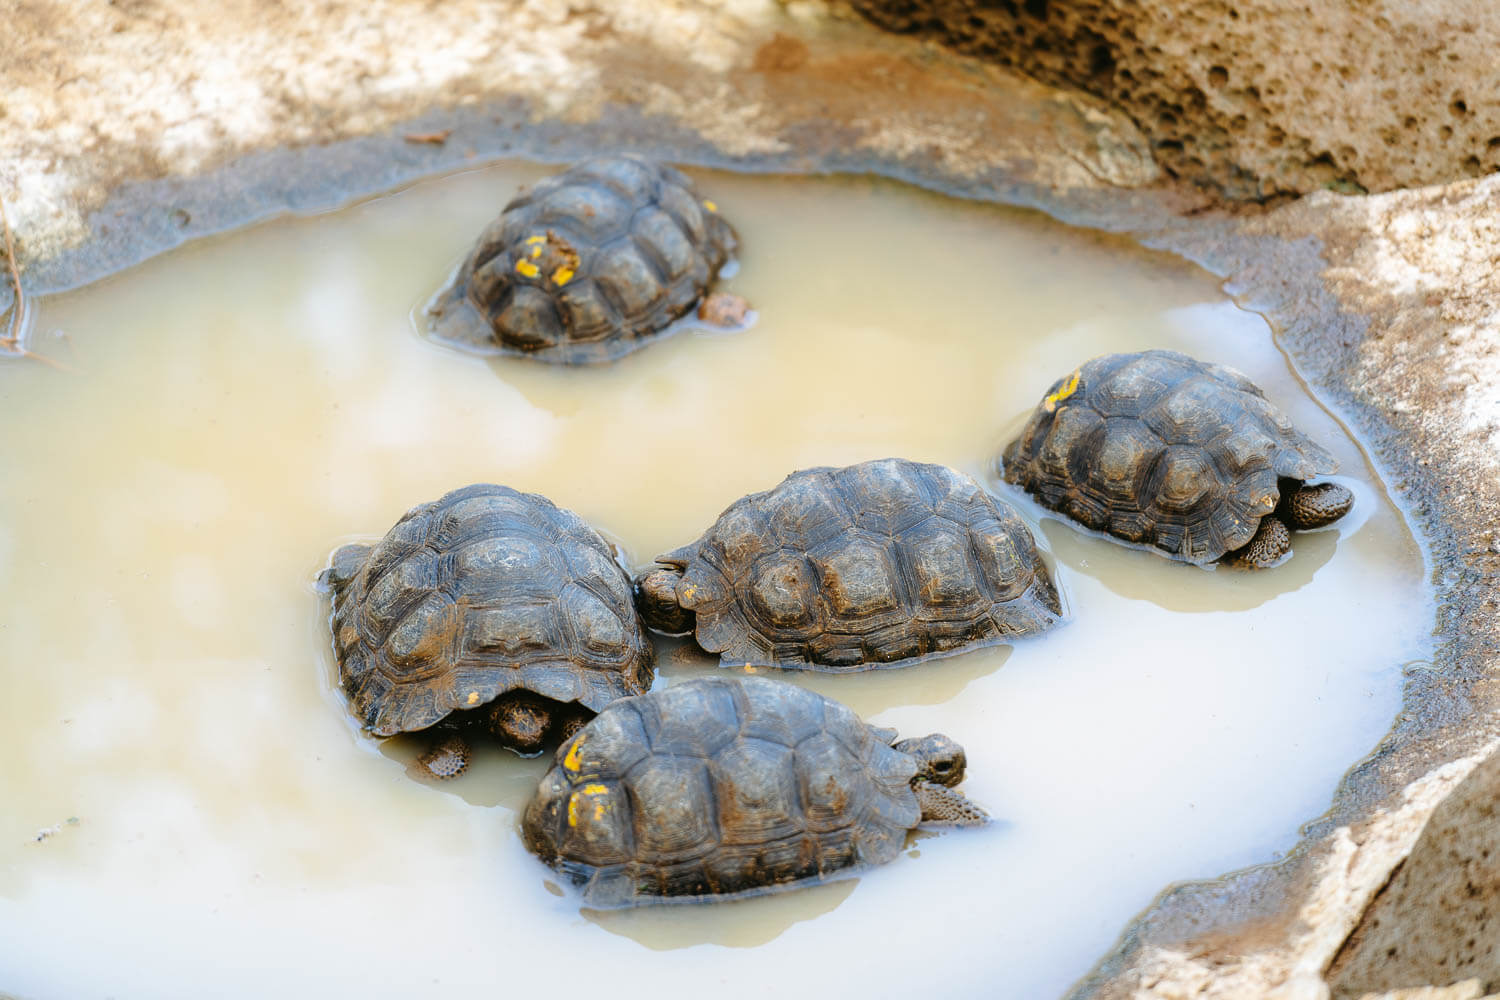 Juvenile Tortoises in "La Galapaguera"